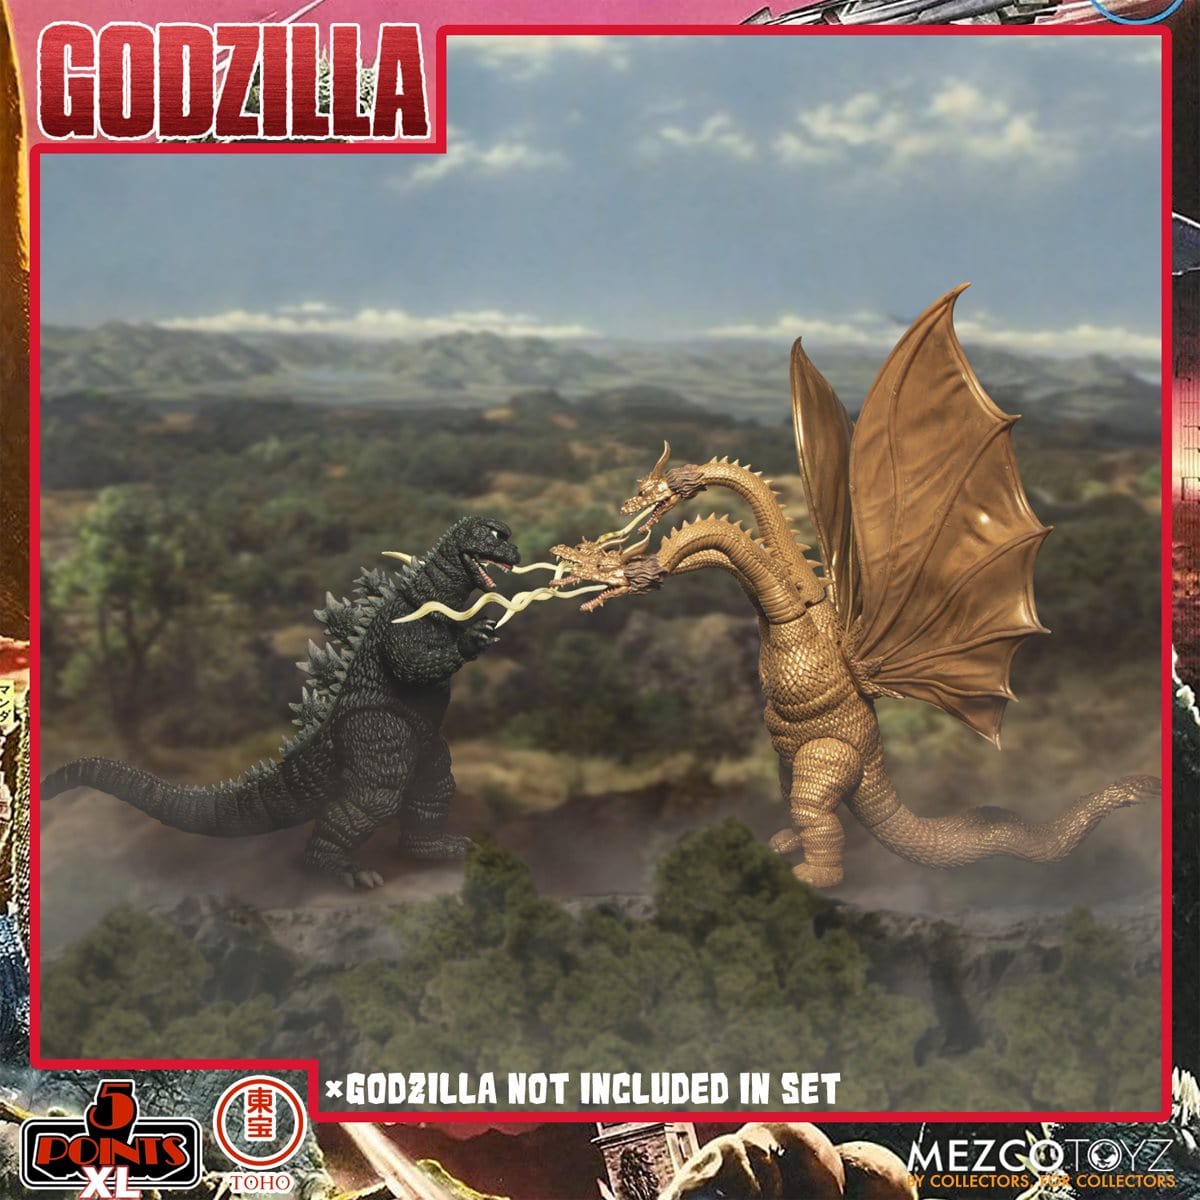 Godzilla: Destroy All Monsters (1968) 5 Points XL Round 2 Boxed Set - Pop-O-Loco - Mezco